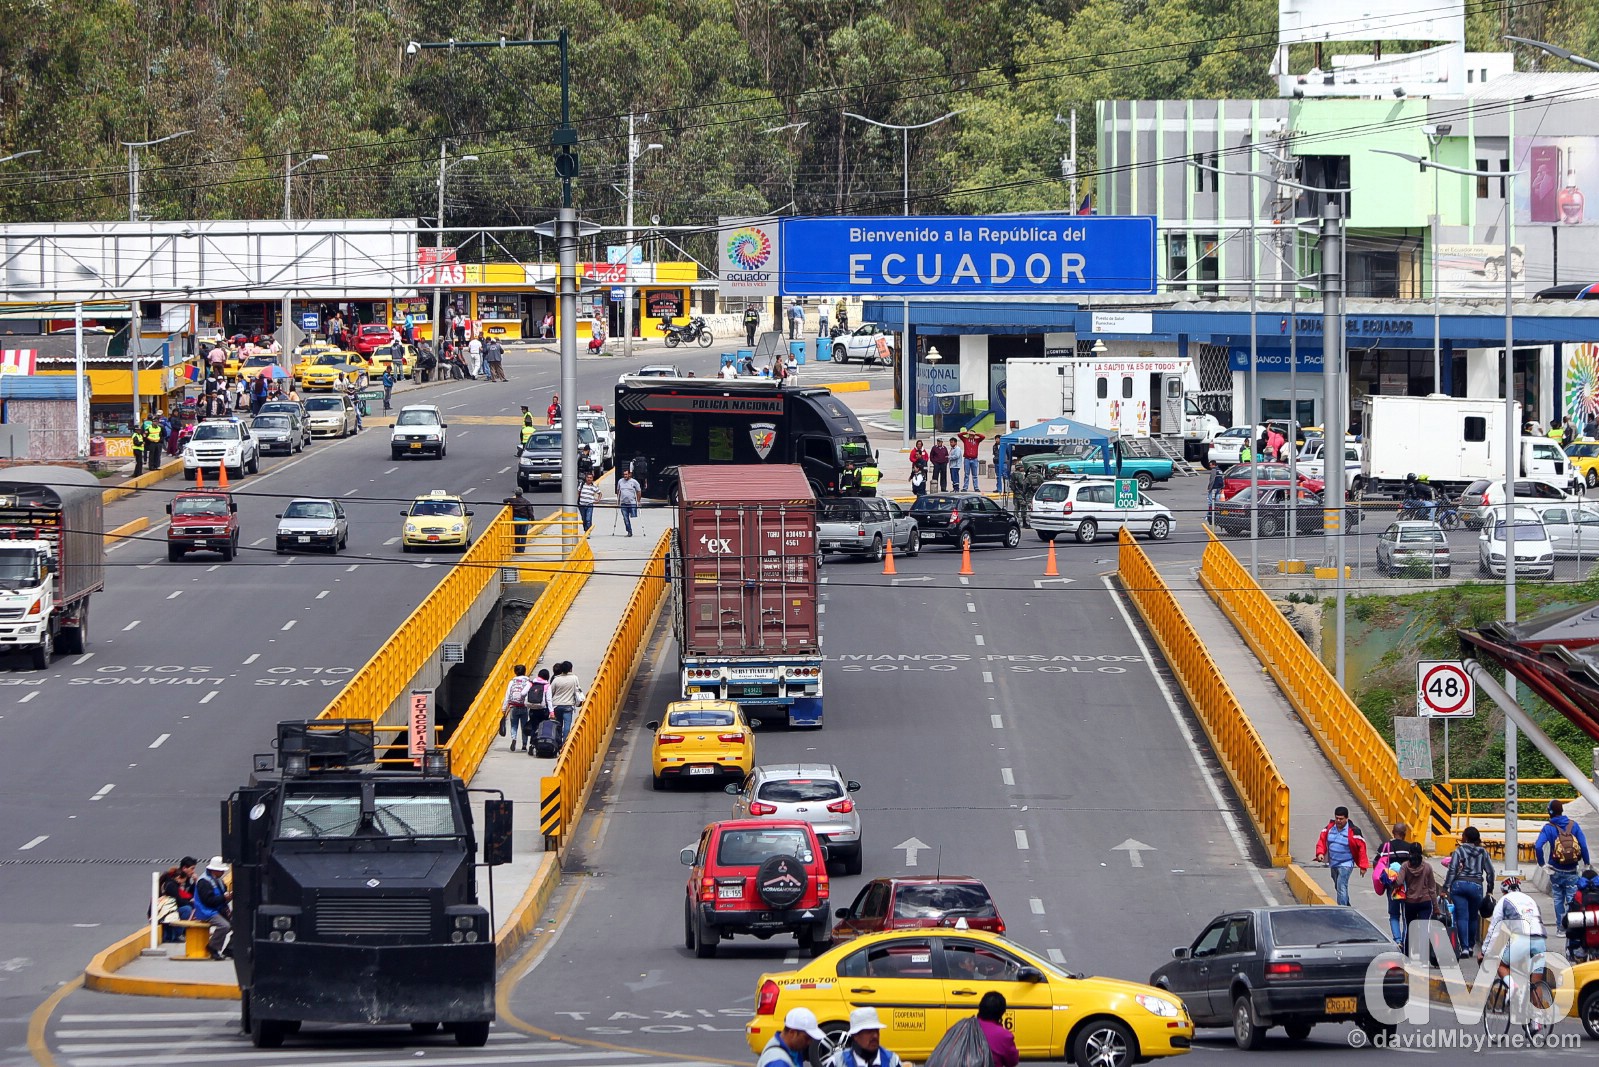 Leaving Colombia. Ecuador as seen across the Colombian side of the Rumichaca bridge marking the Colombia/Ecuador border. July 2, 2015.